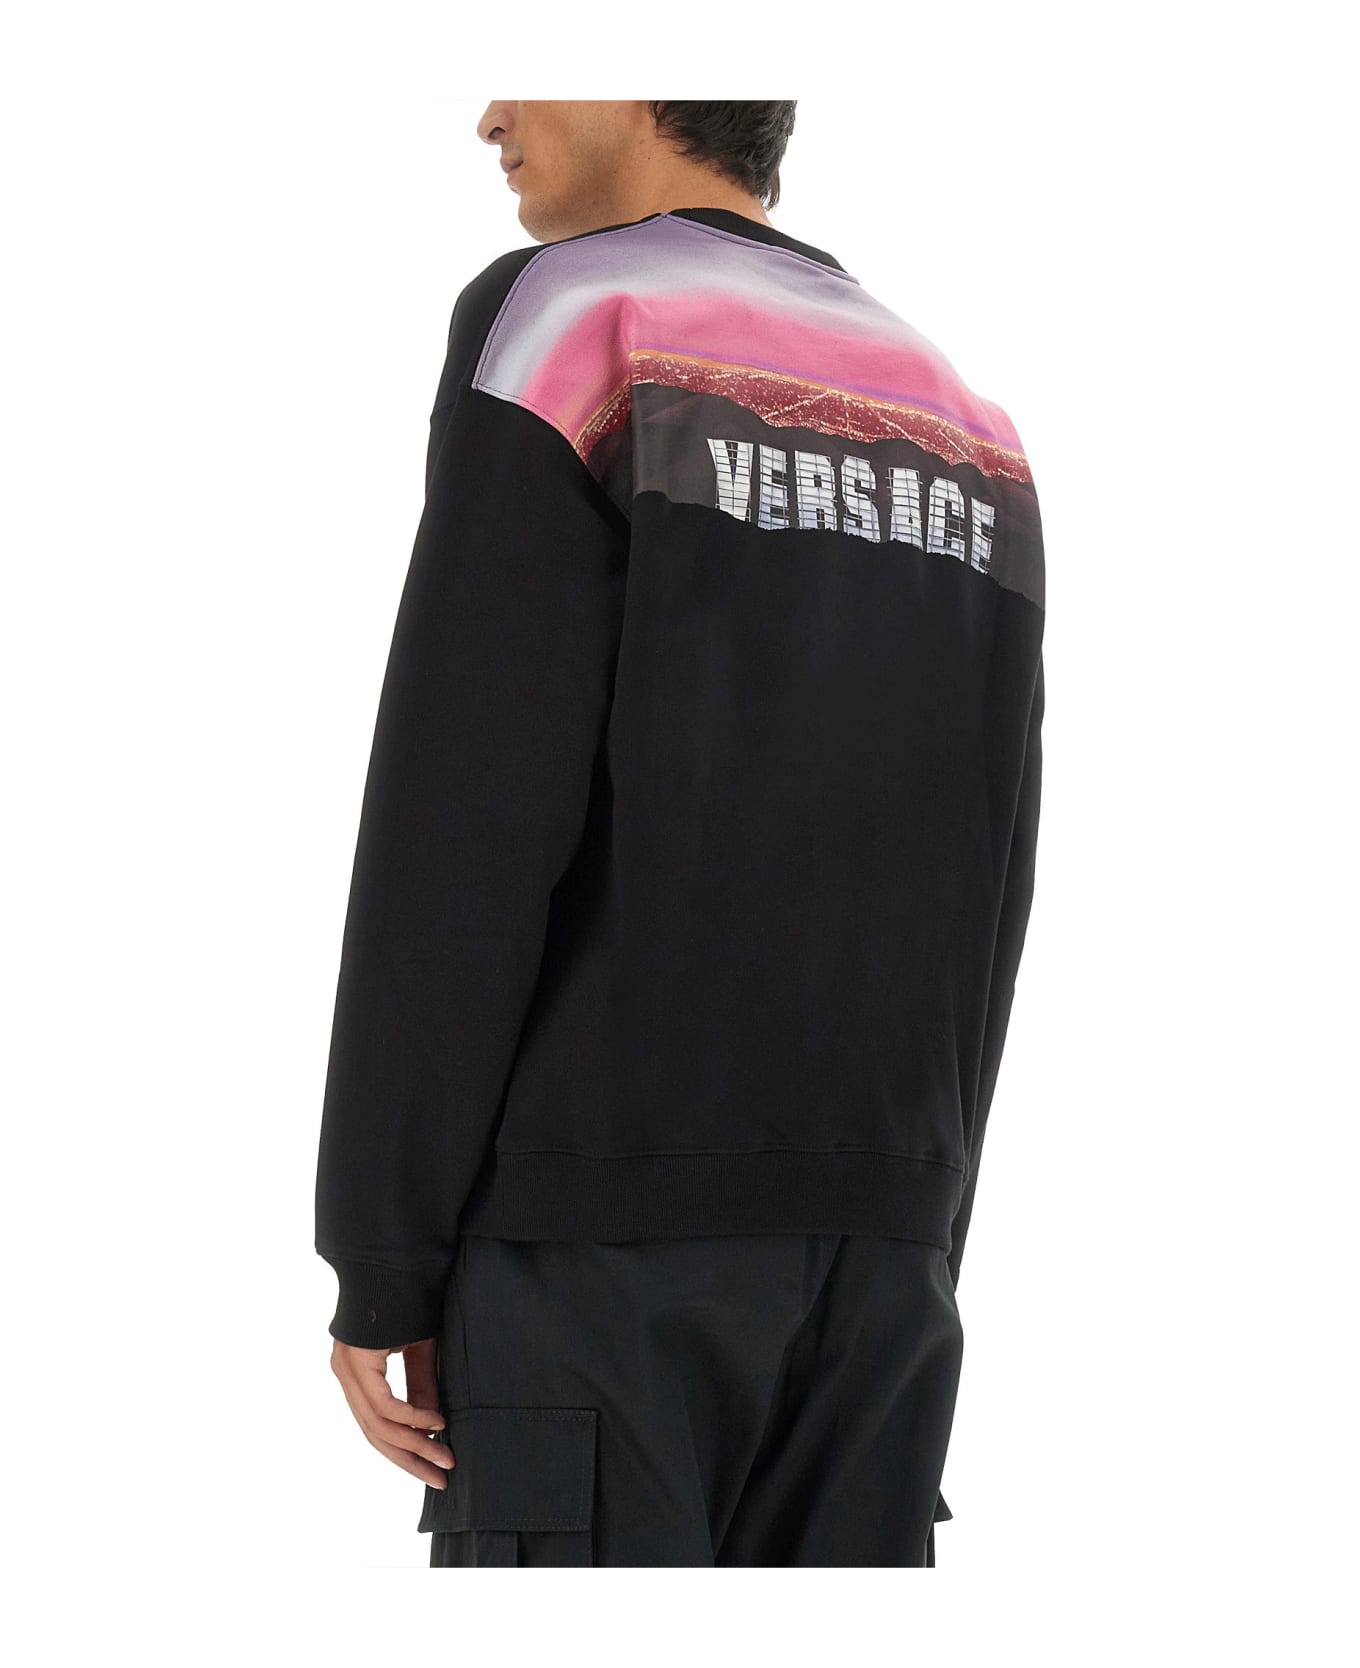 Versace Printed Cotton Crew-neck Sweatshirt - black